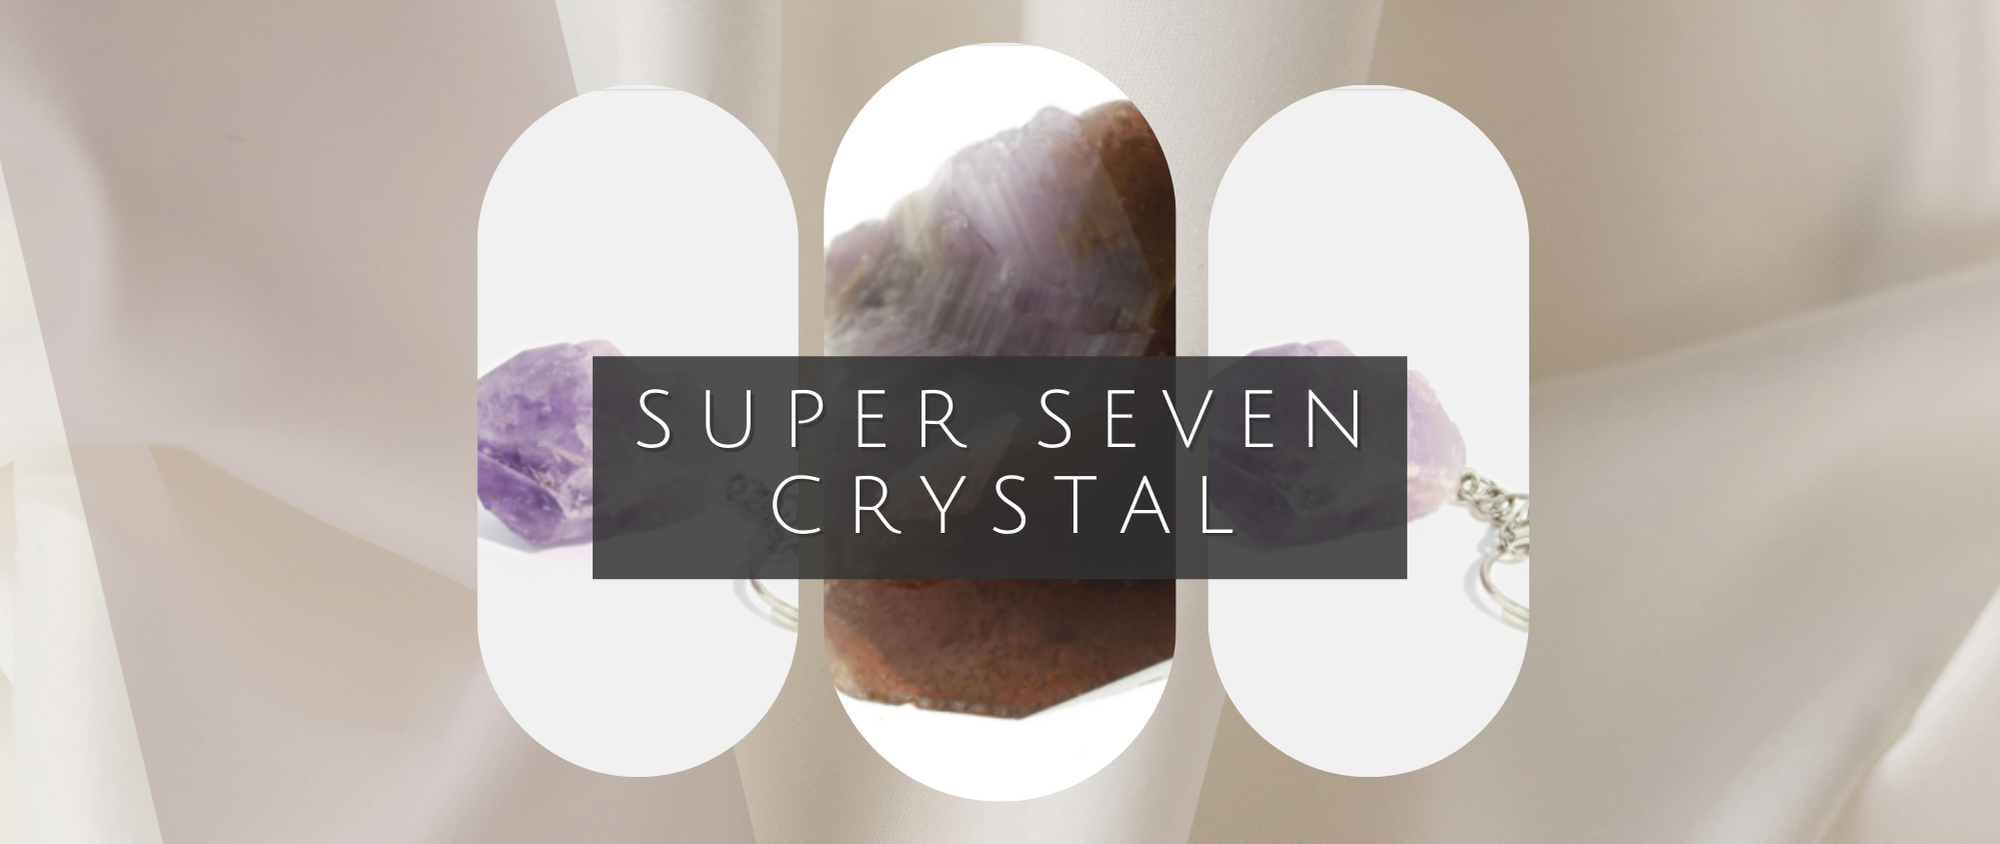 Beginner's Guide to Healing Crystals - CrystalsandJewelry.com